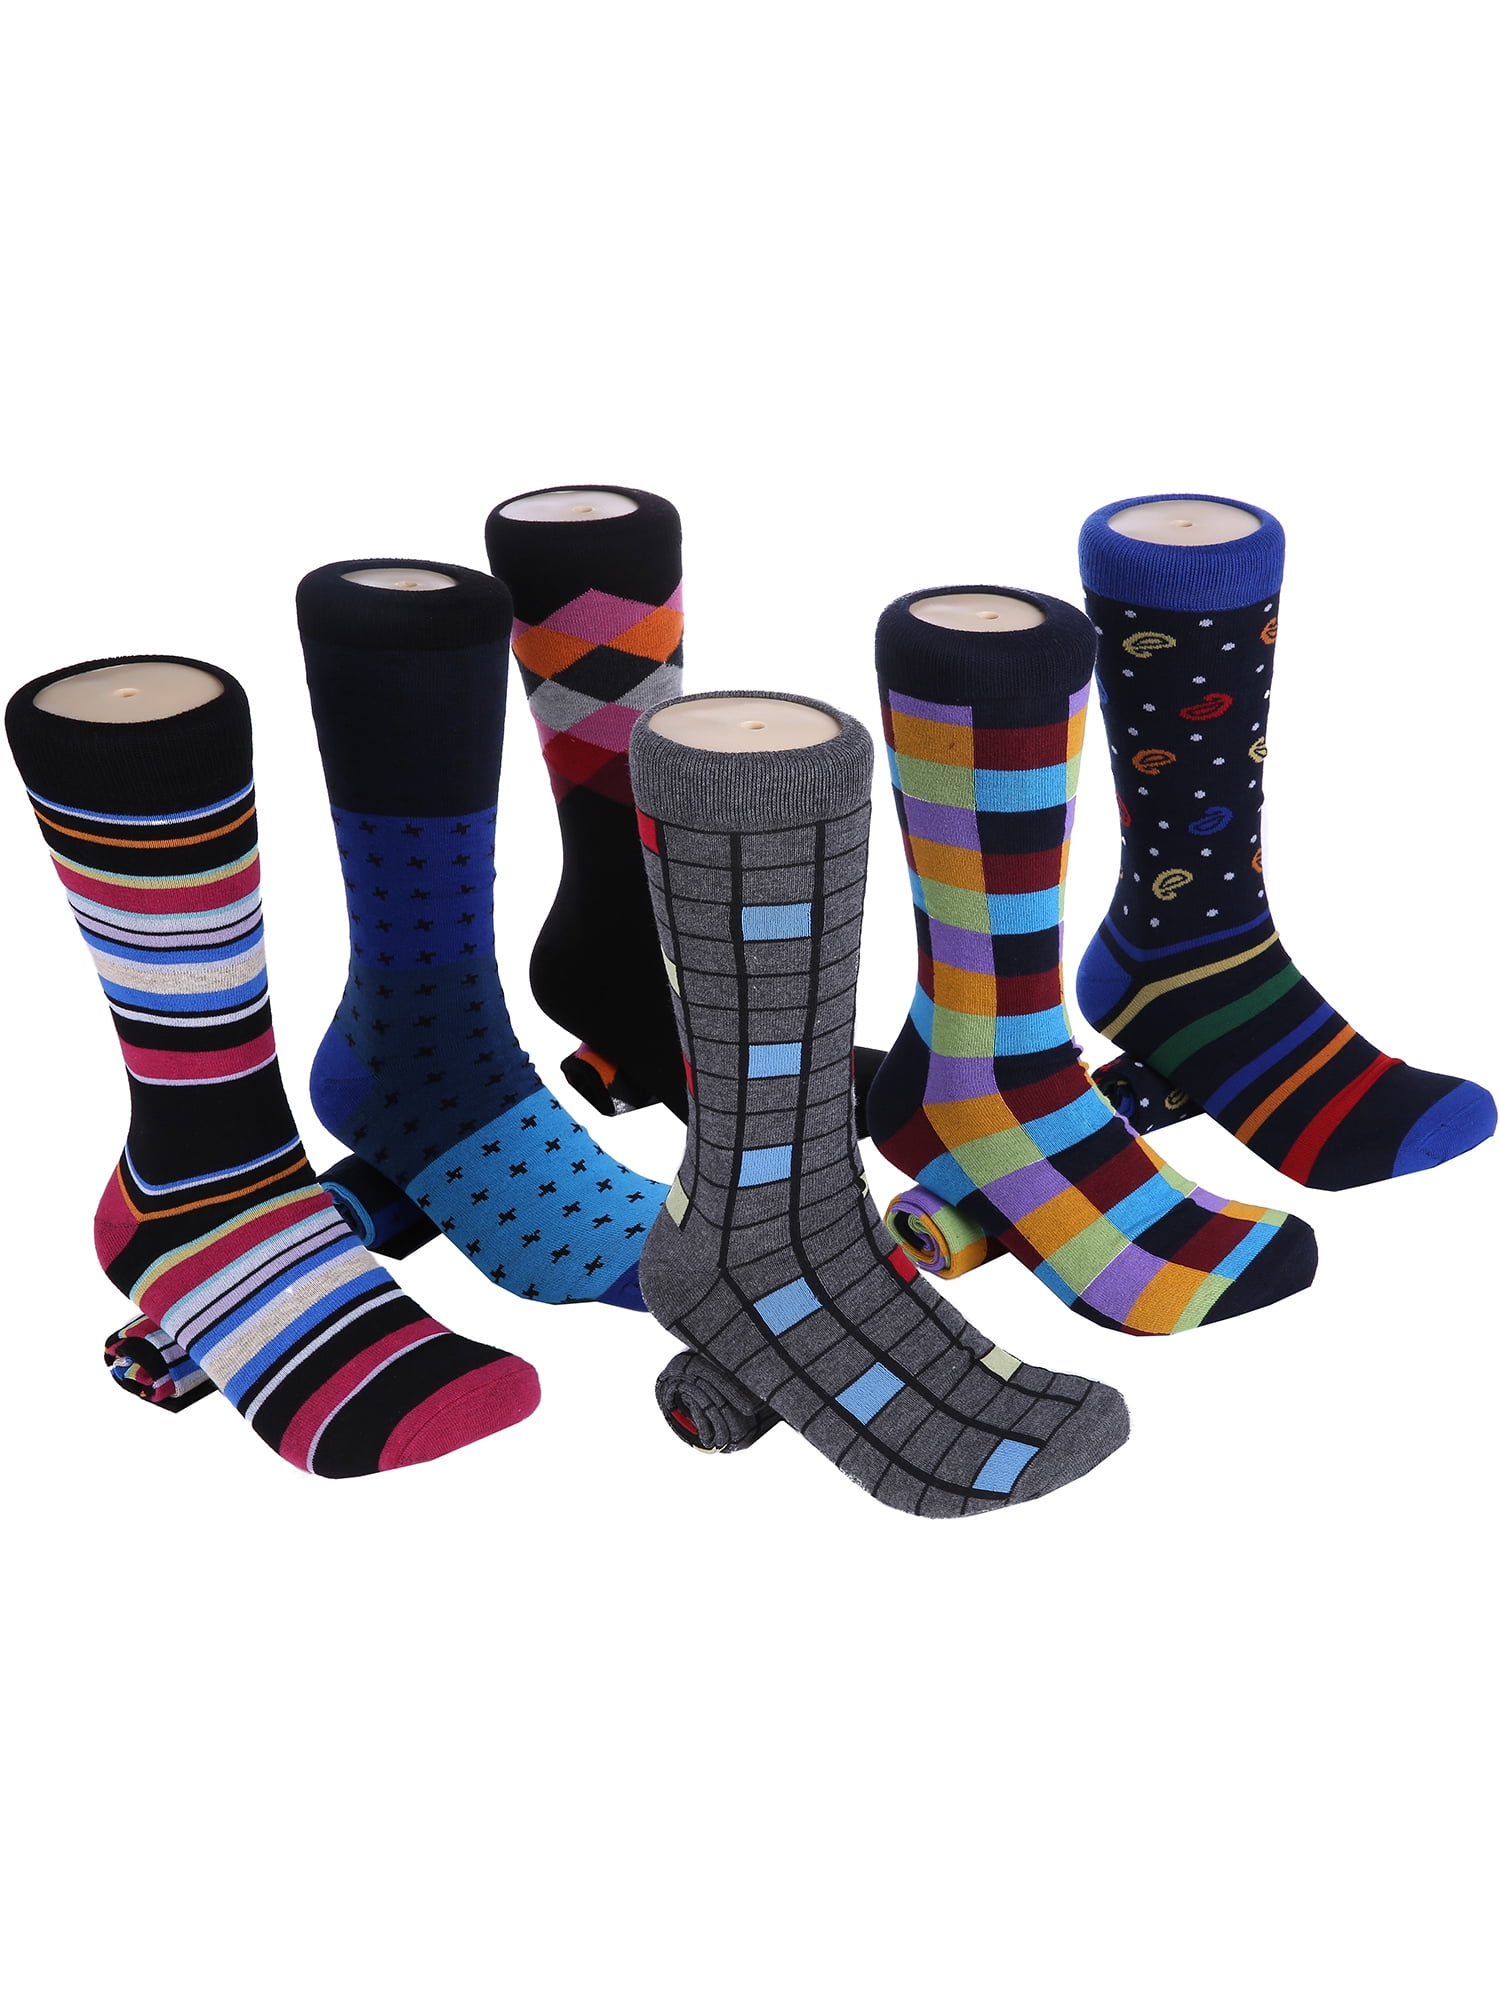 Marino Mens Socks Colorful Design Crew Socks Cotton Funky Socks Mens 12 Pack 